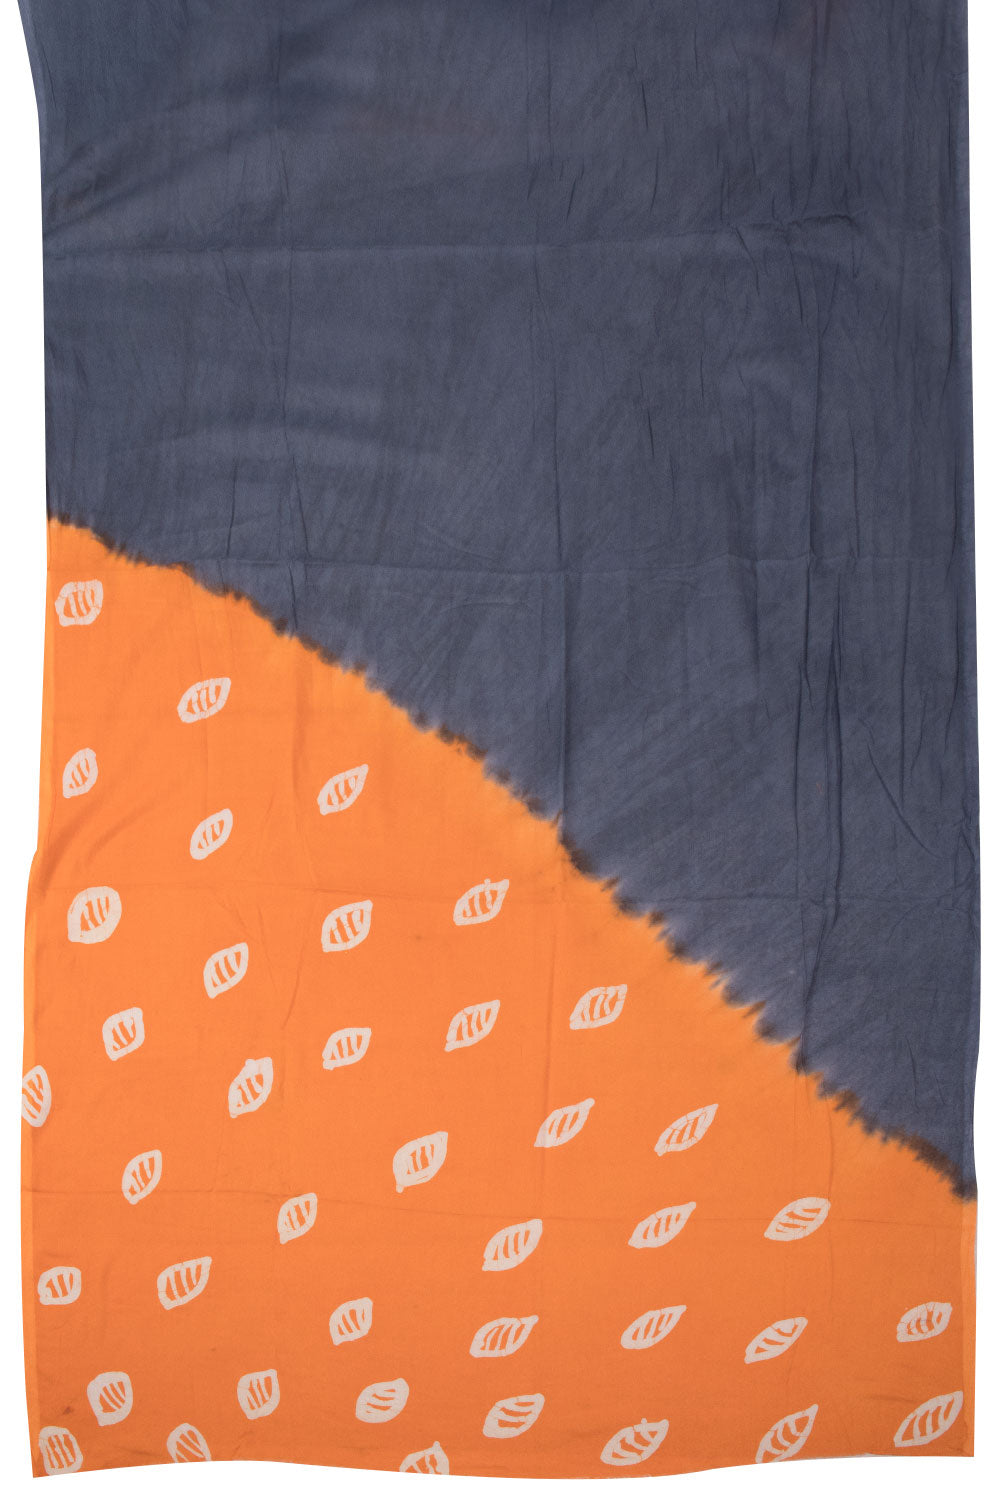 Bright Orange Batik Cotton 3-Piece Salwar Suit Material -Avishya